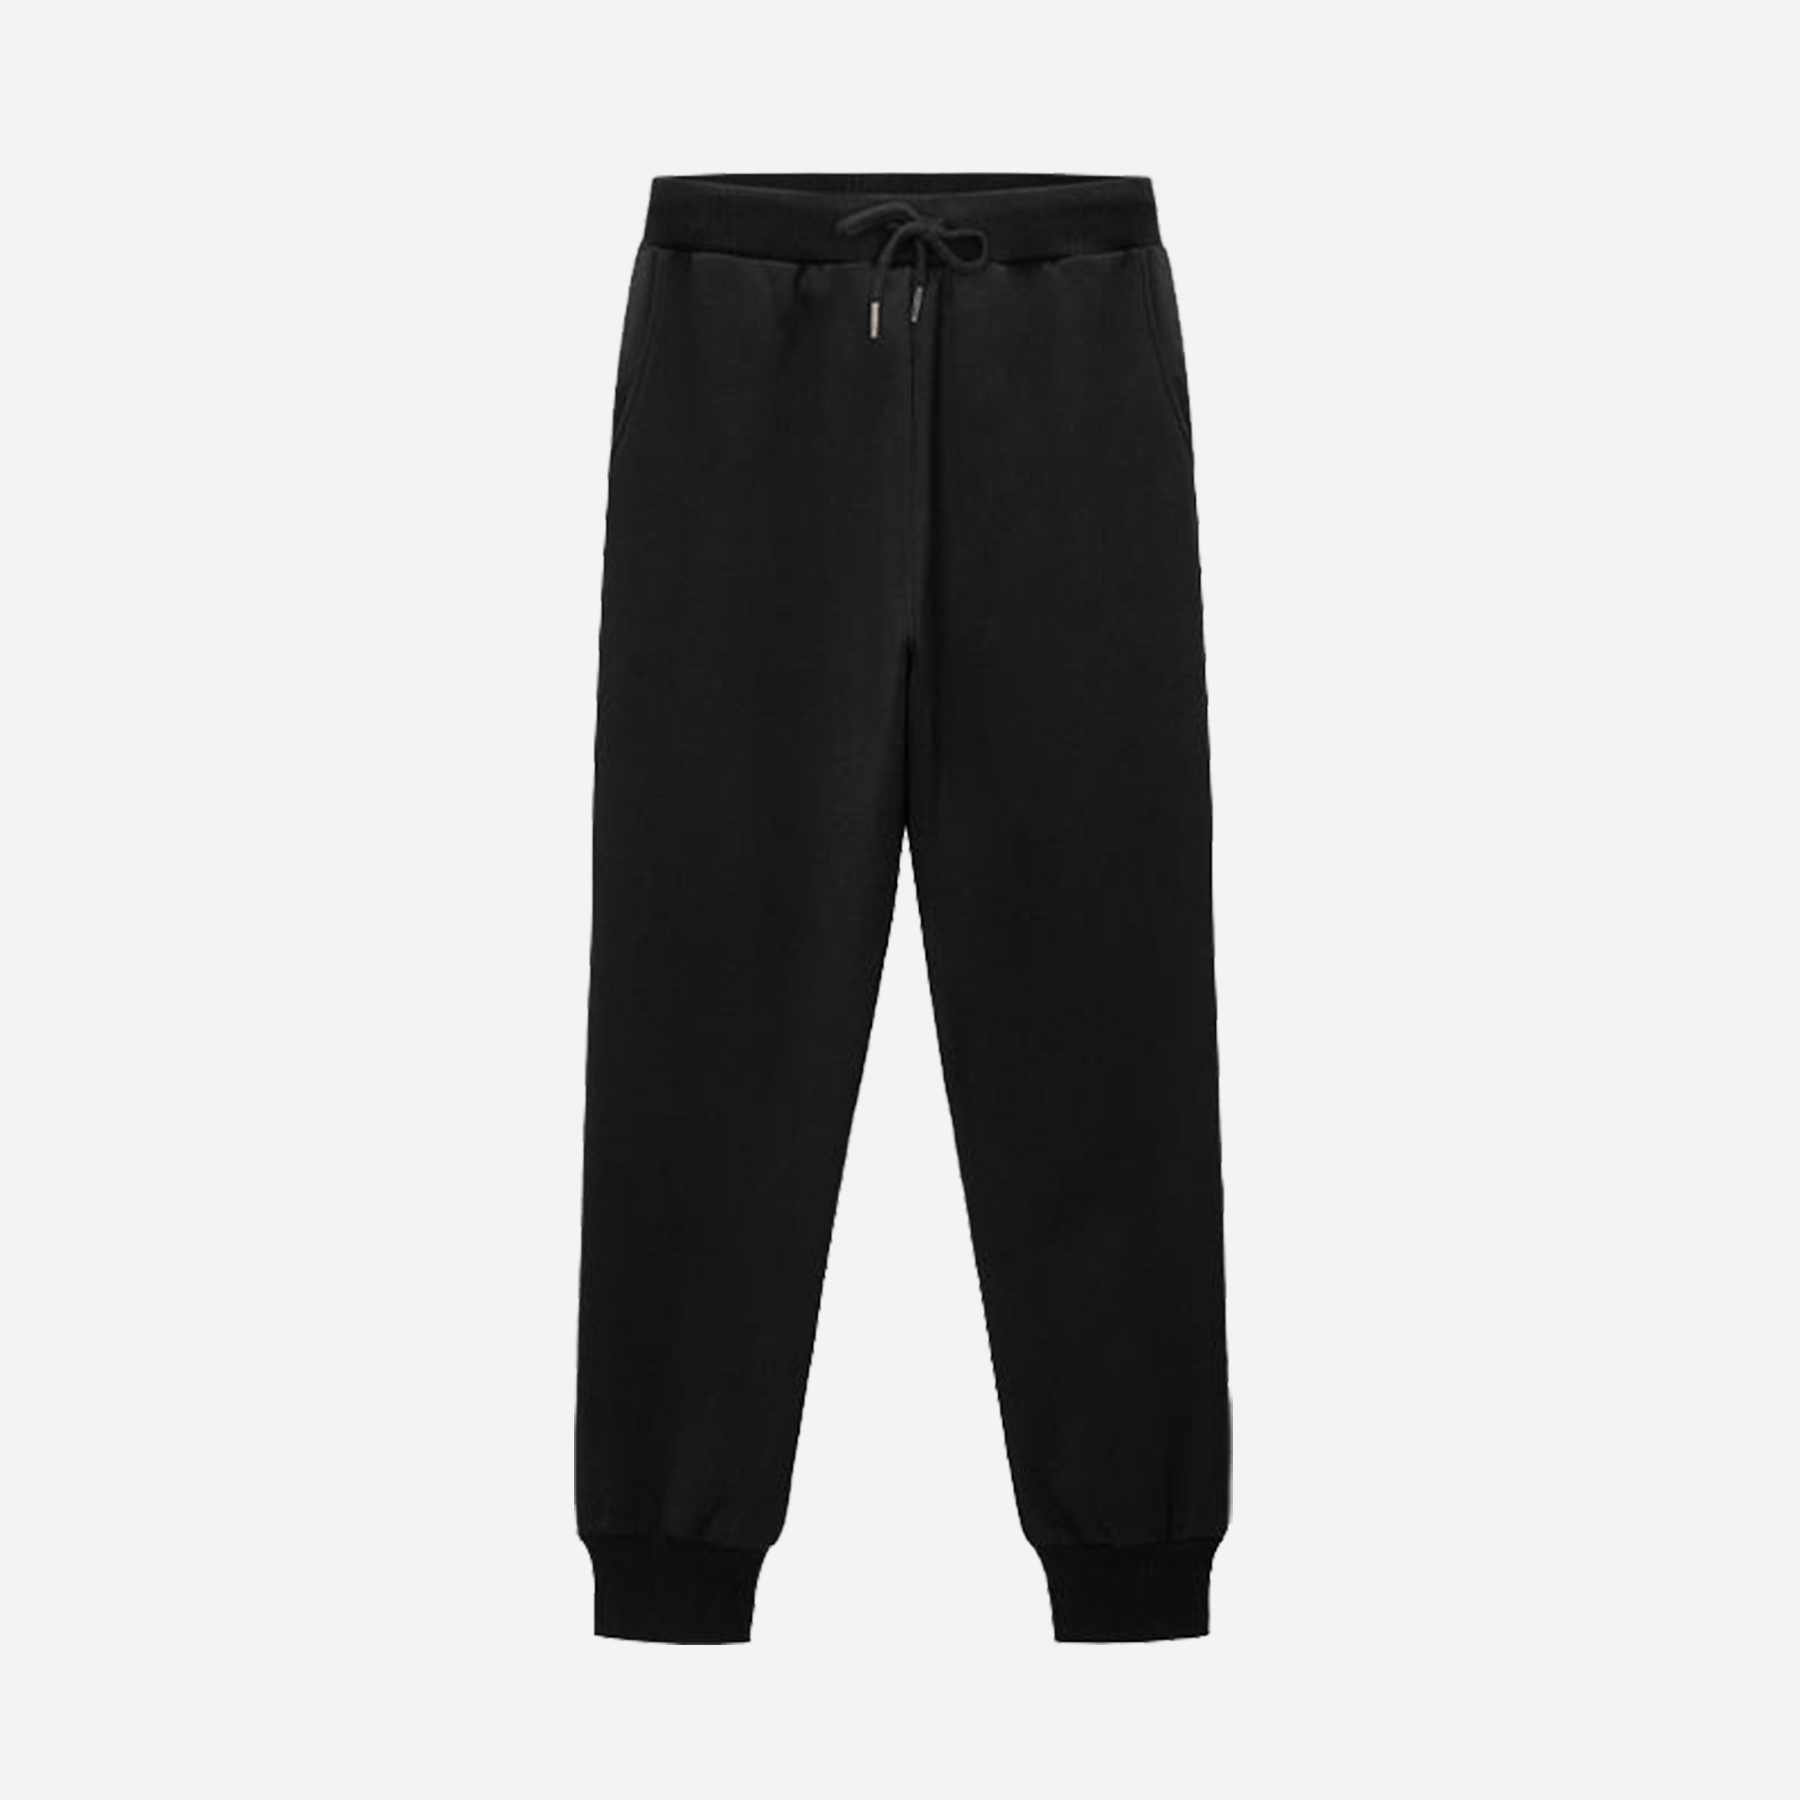 Sweat Pants – I Black – CasualSelect